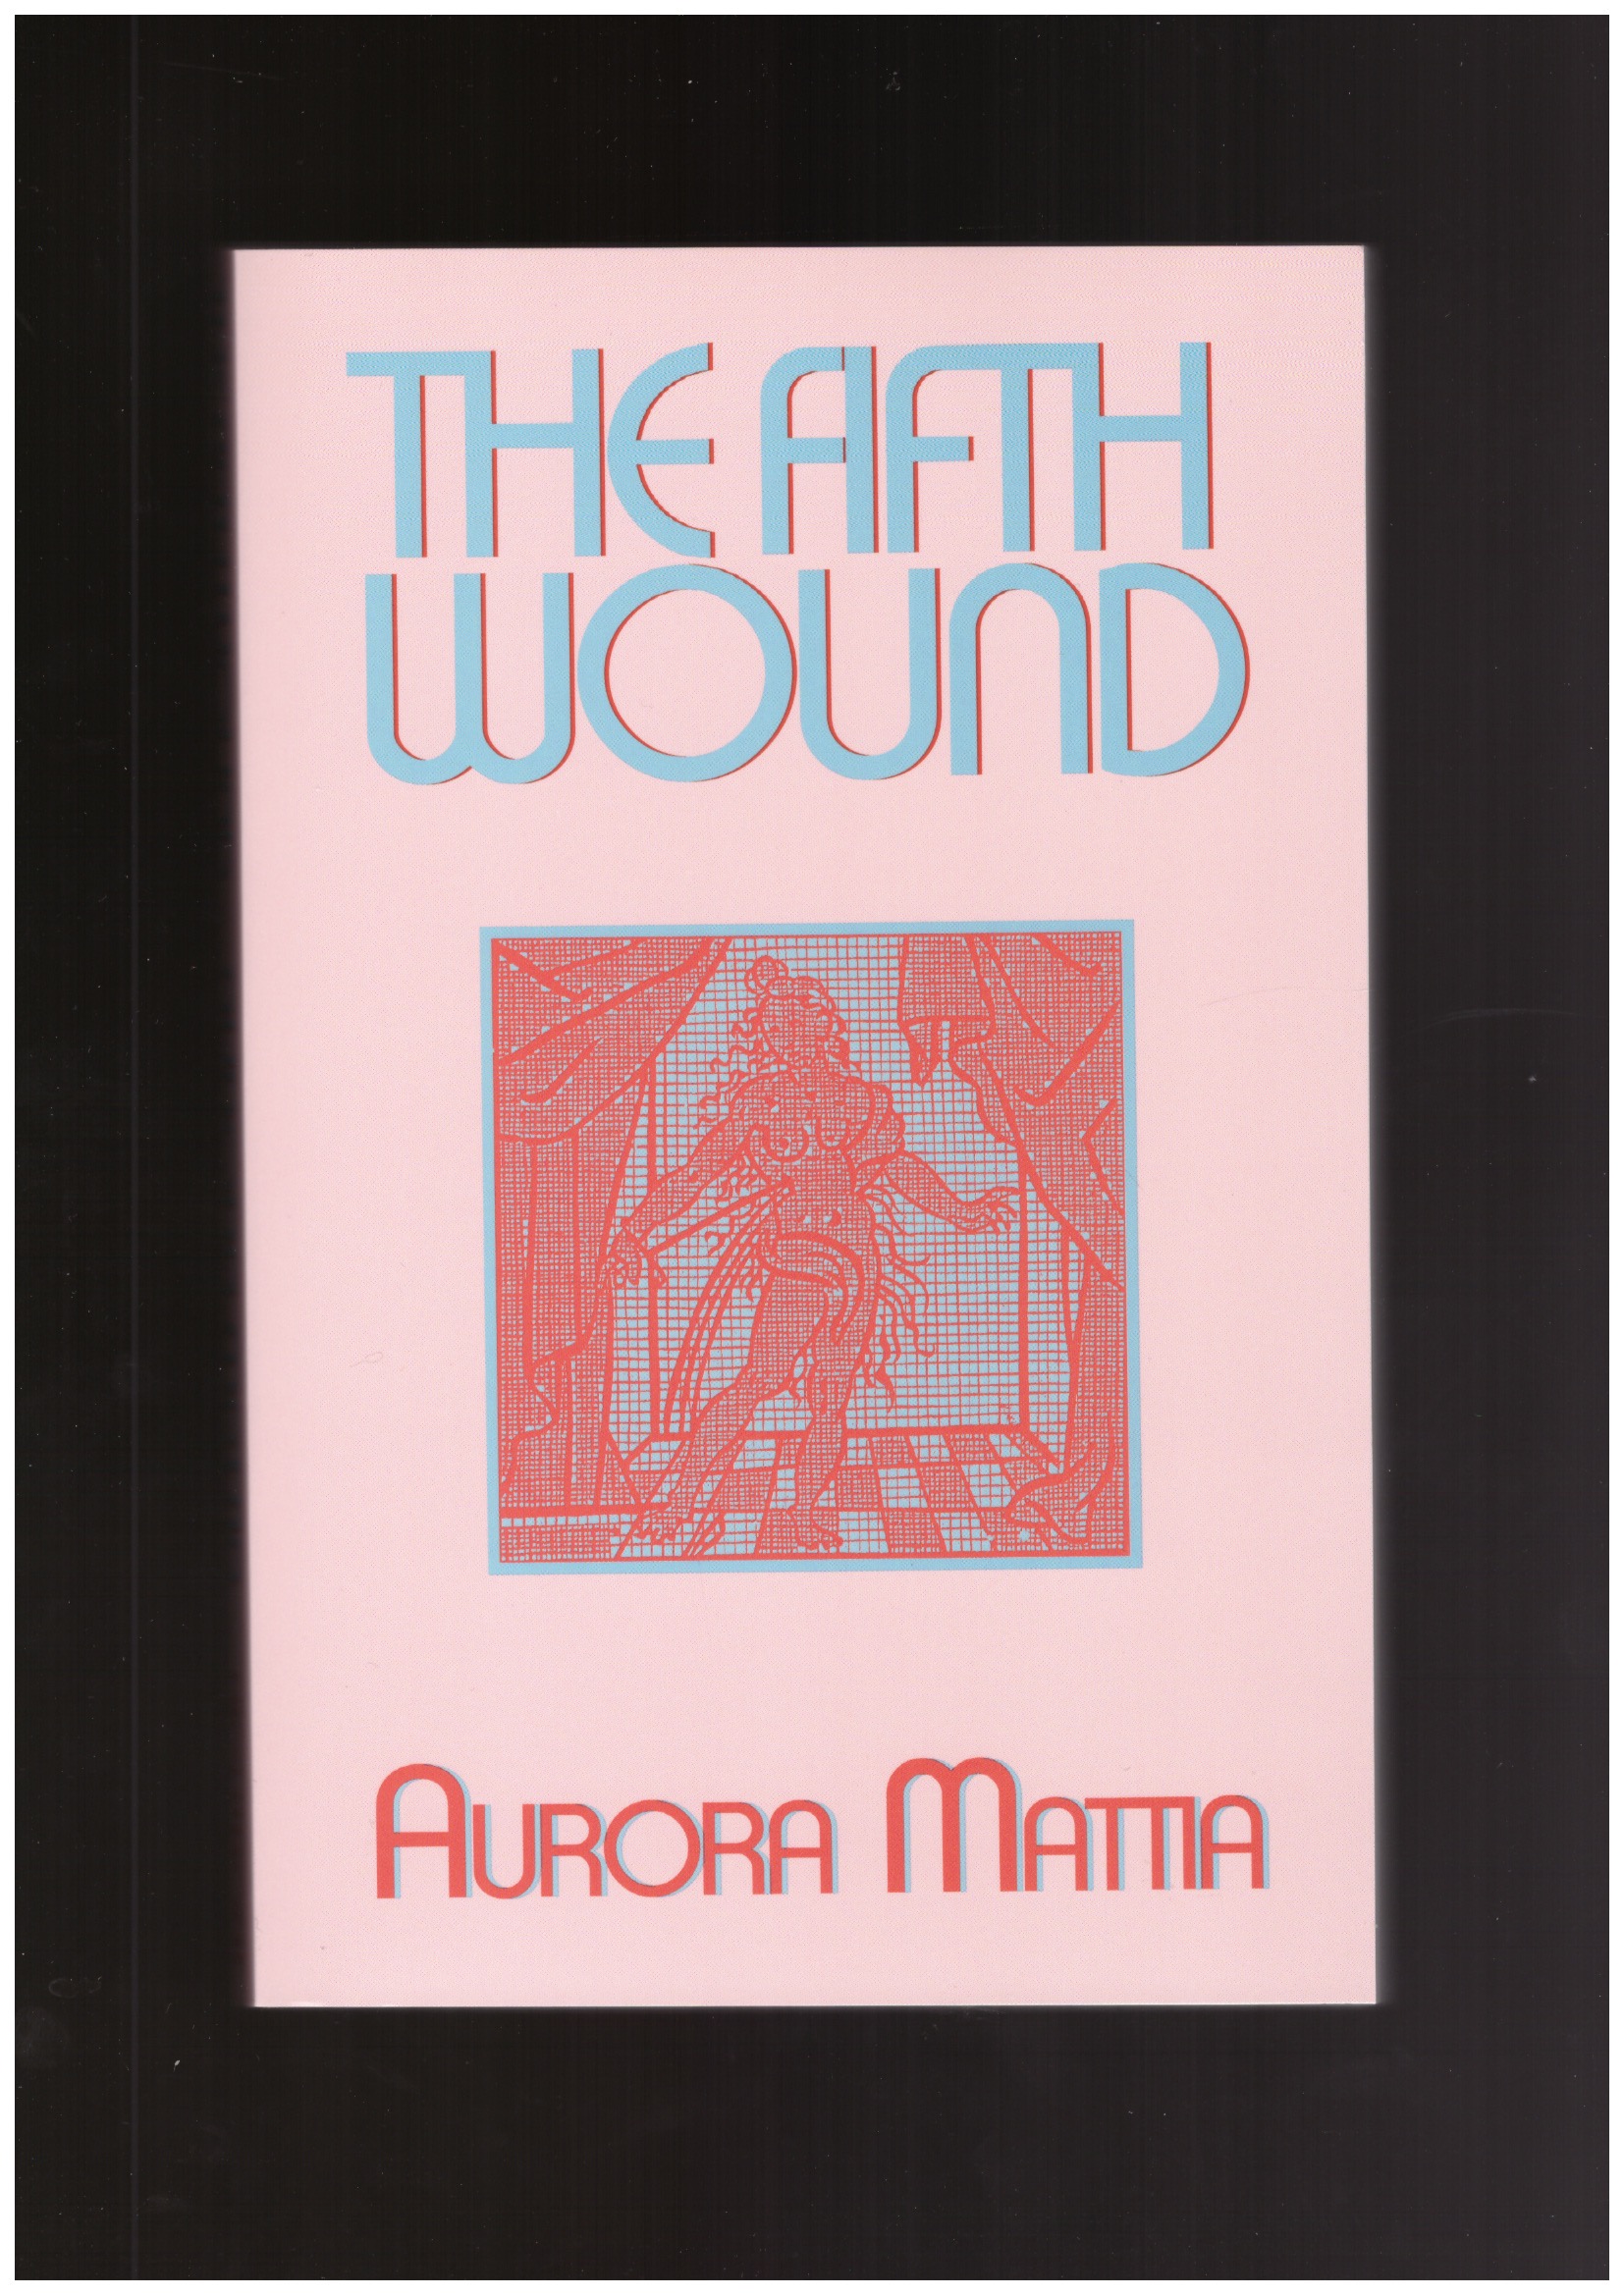 MATTIA, Aurora - The Fifth Wound